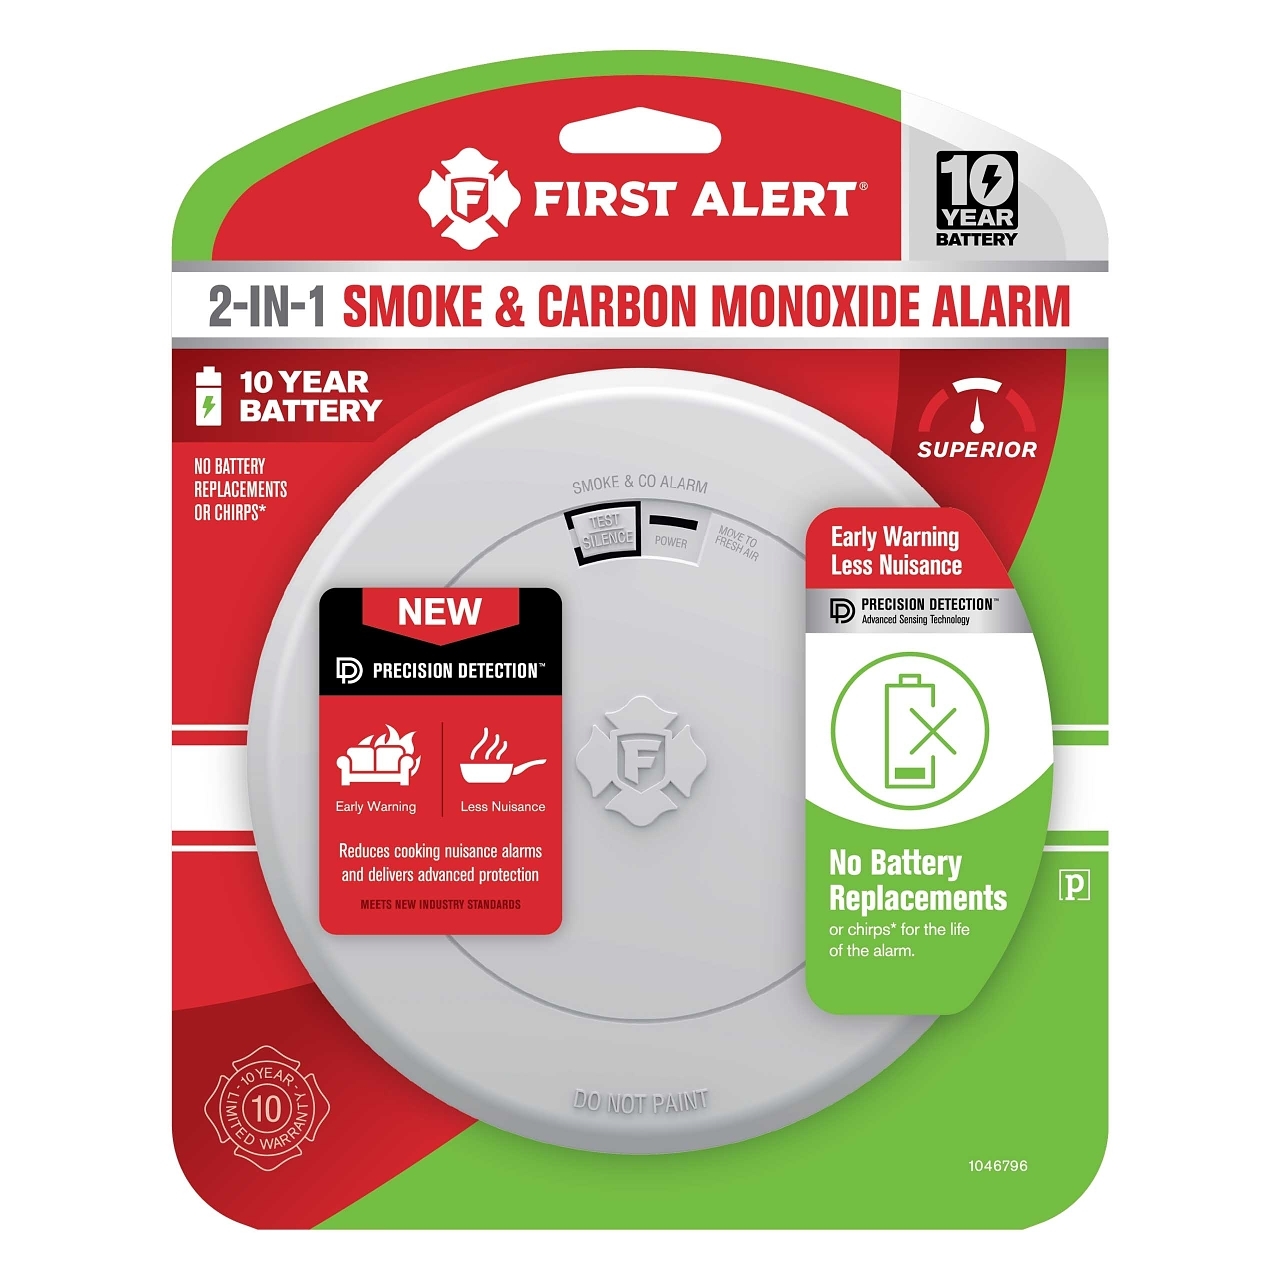 First Alert Precision Detector Smoke and Carbon Monoxide Alarm